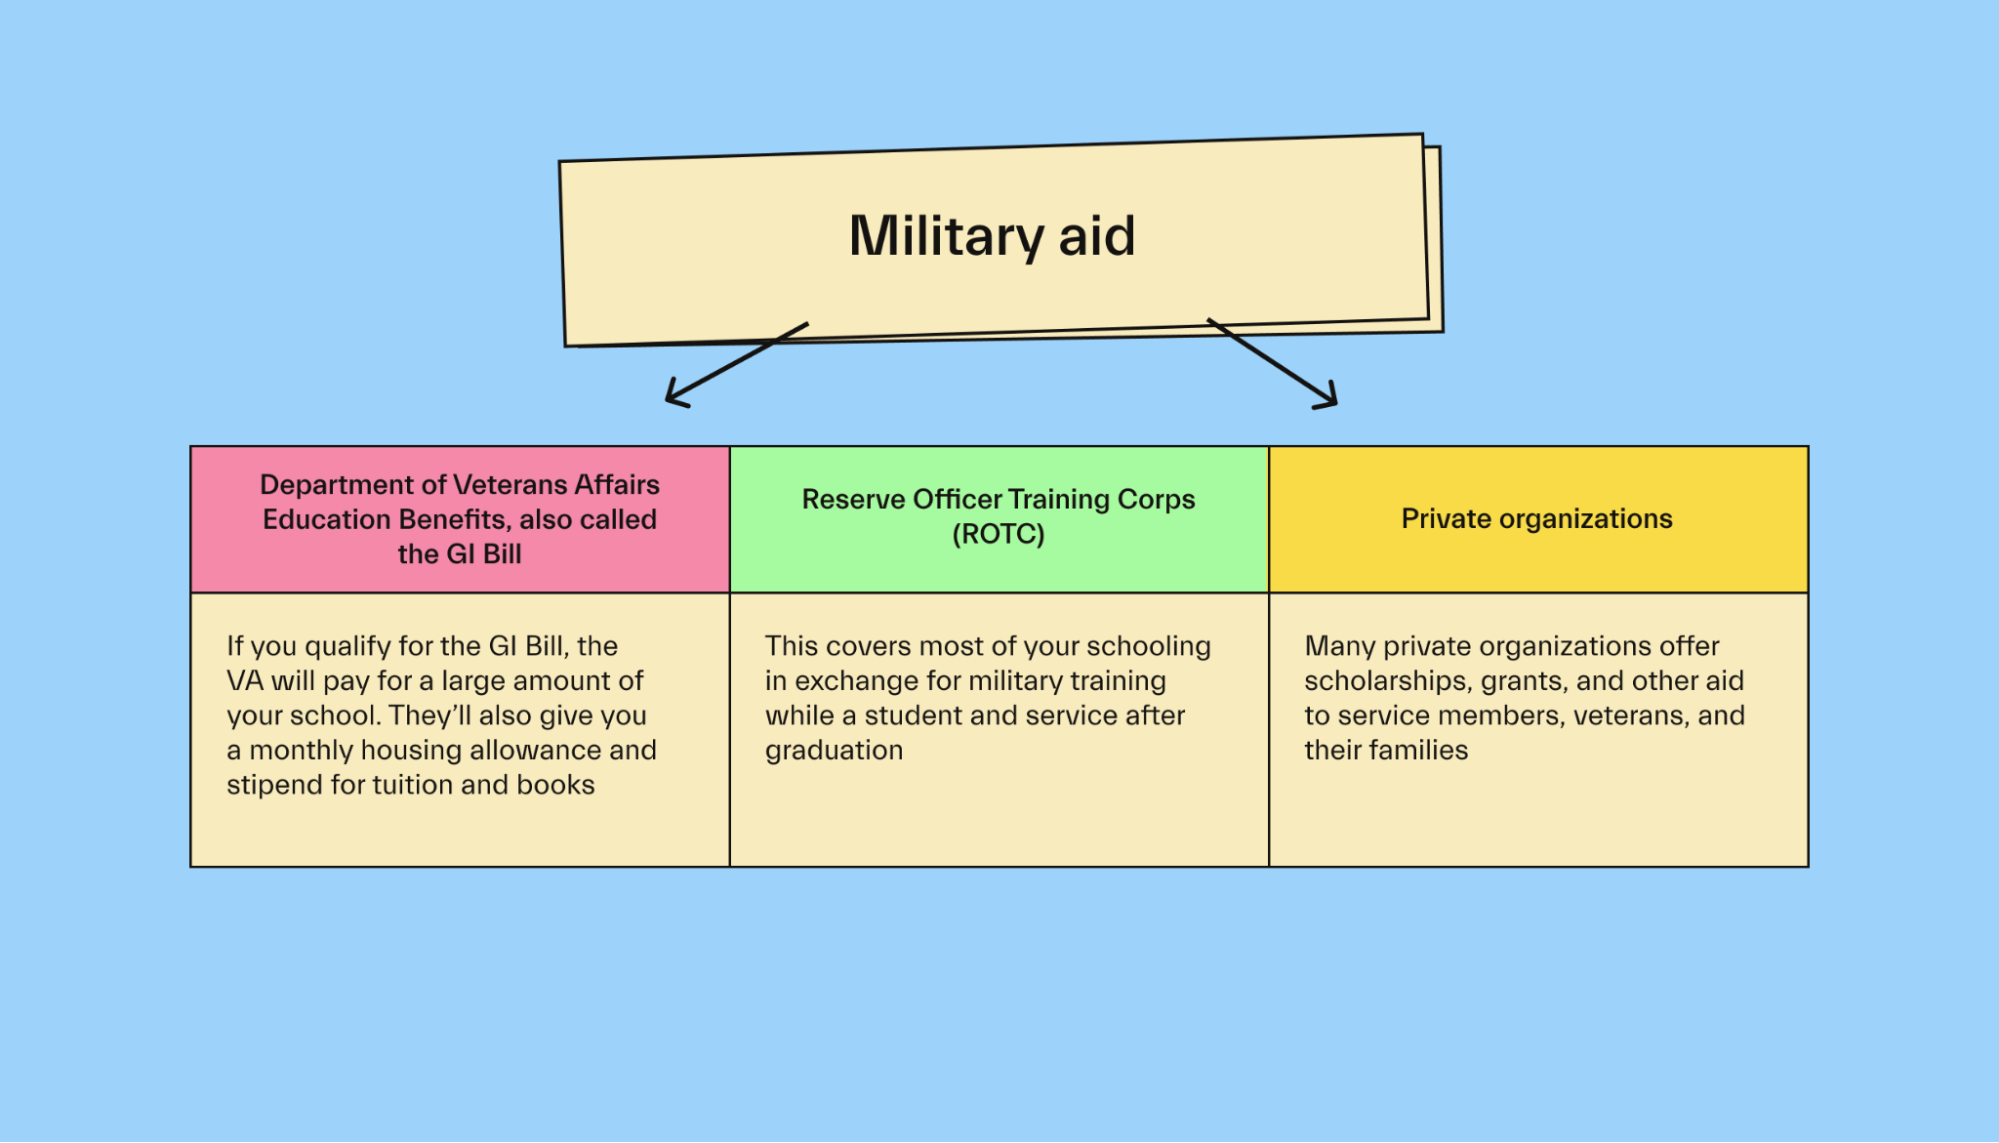 Military aid